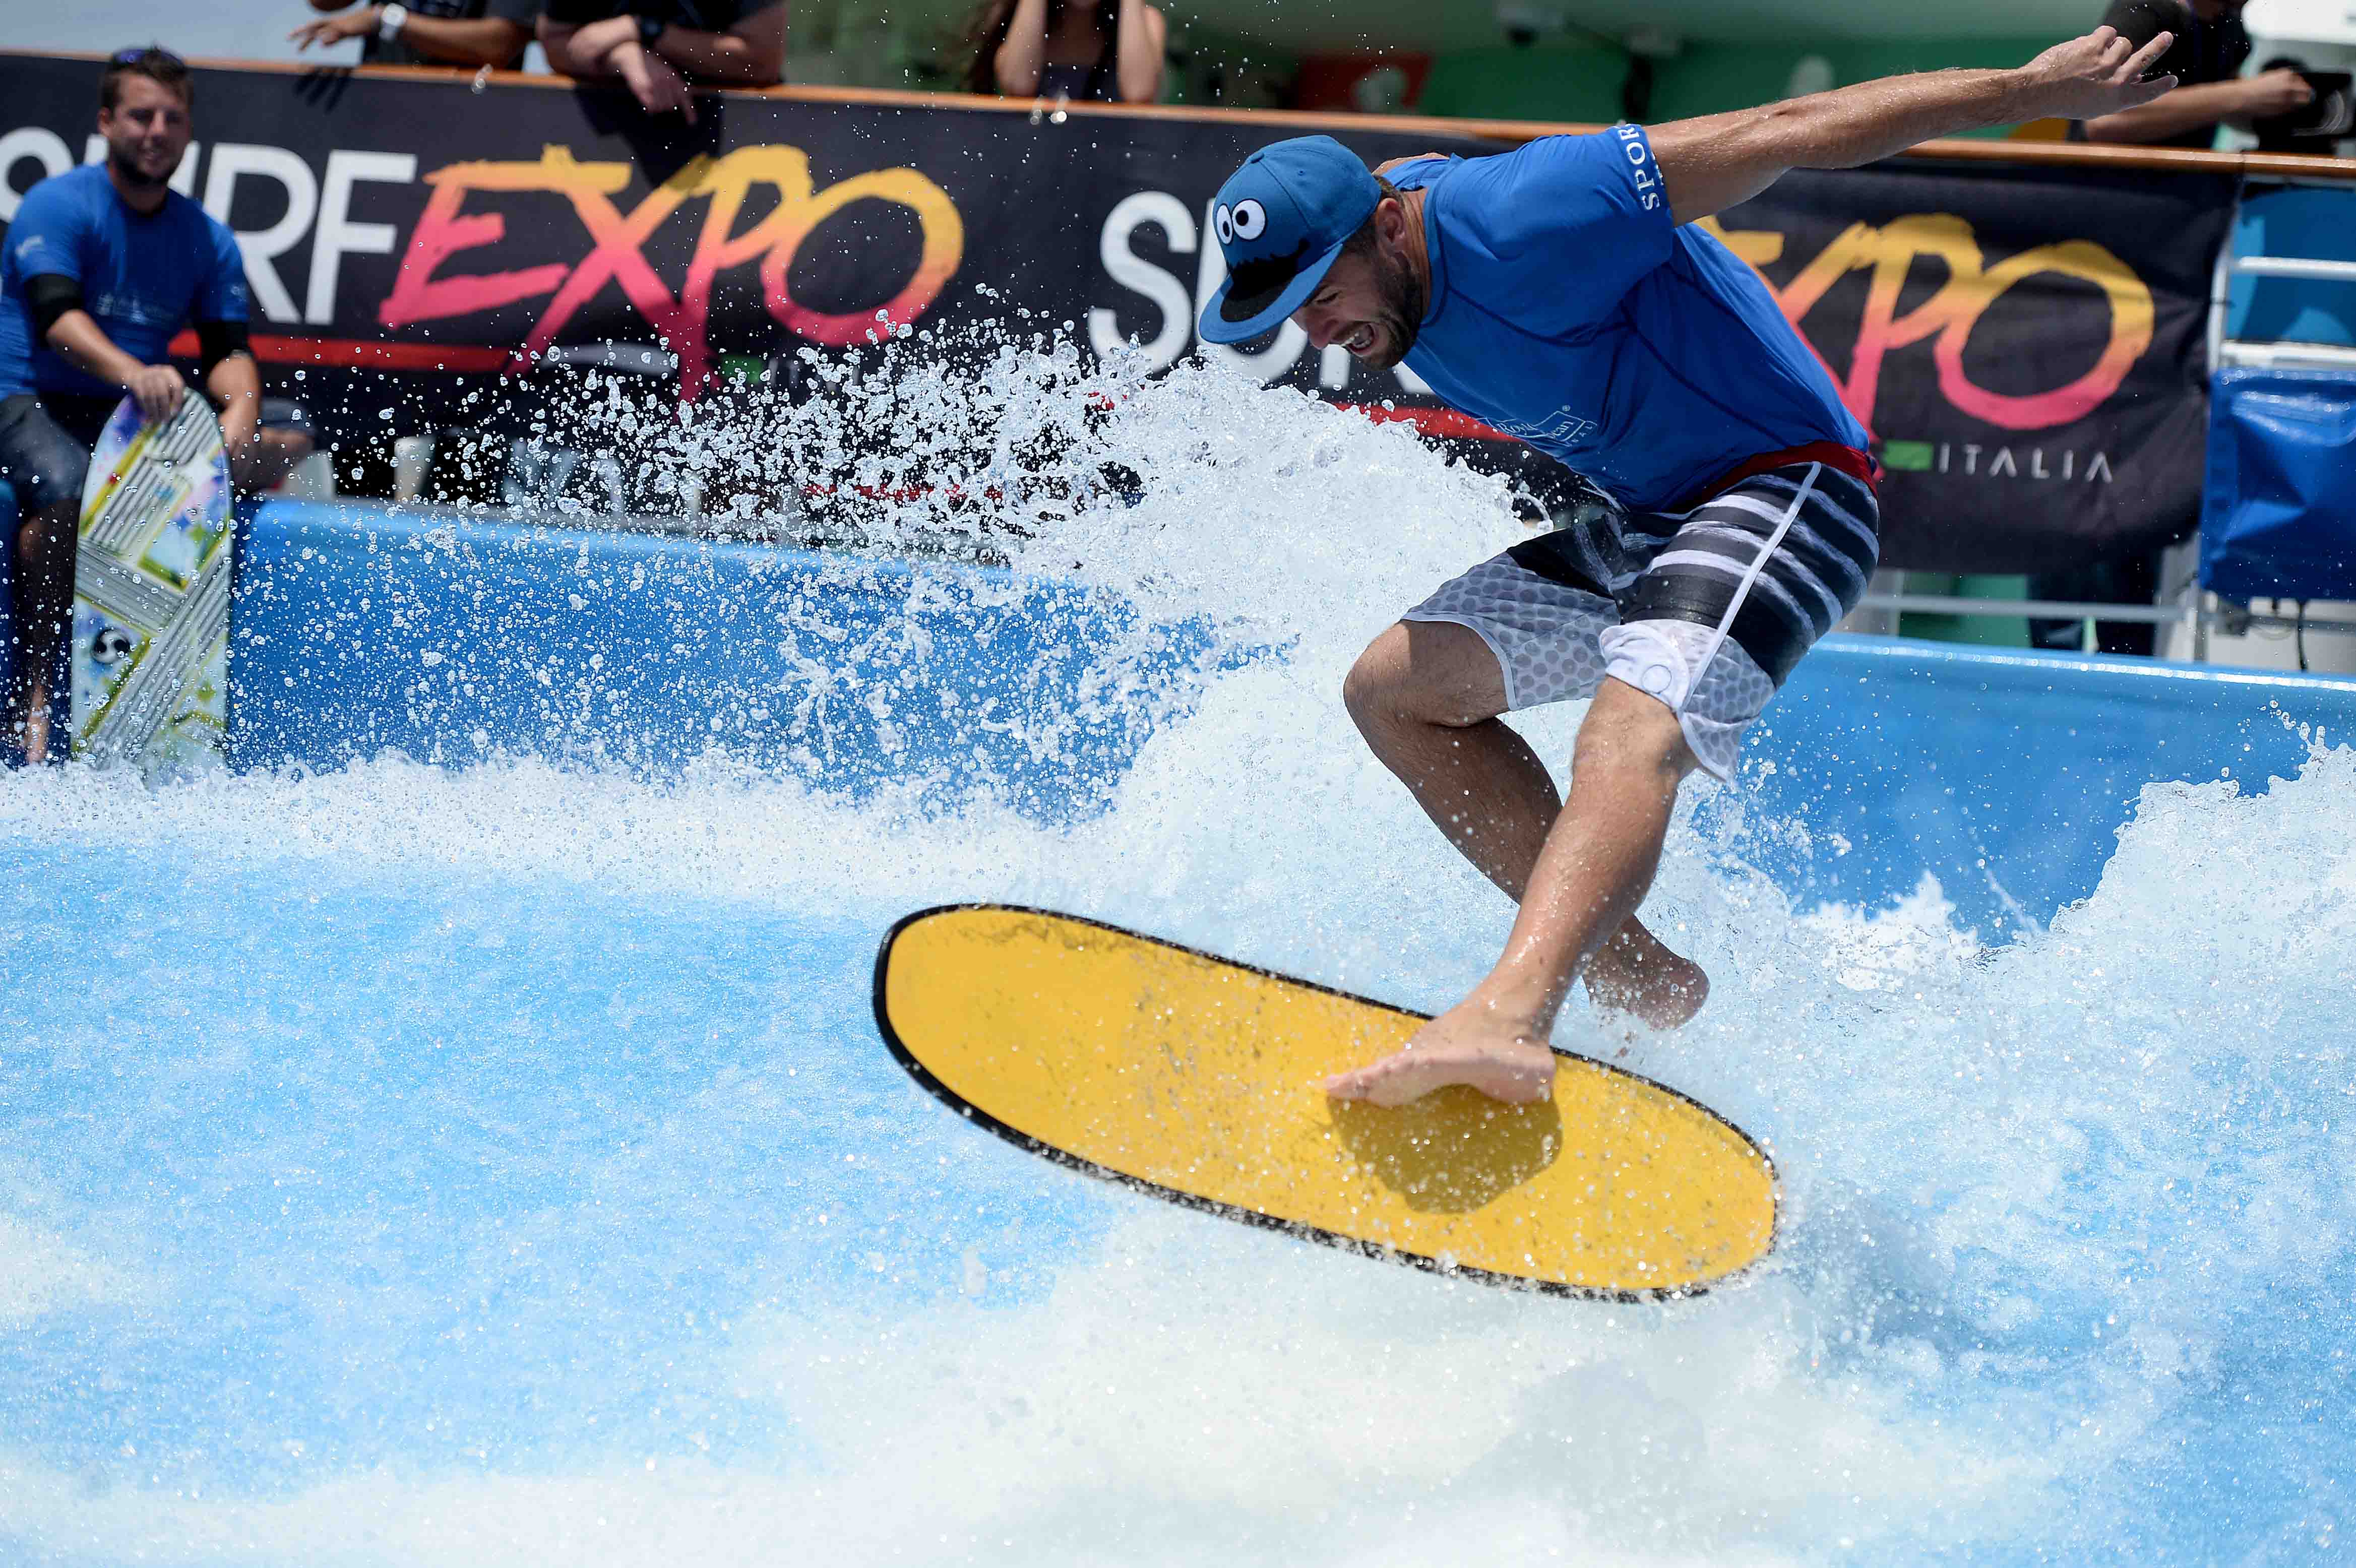 Italia Surf Expo